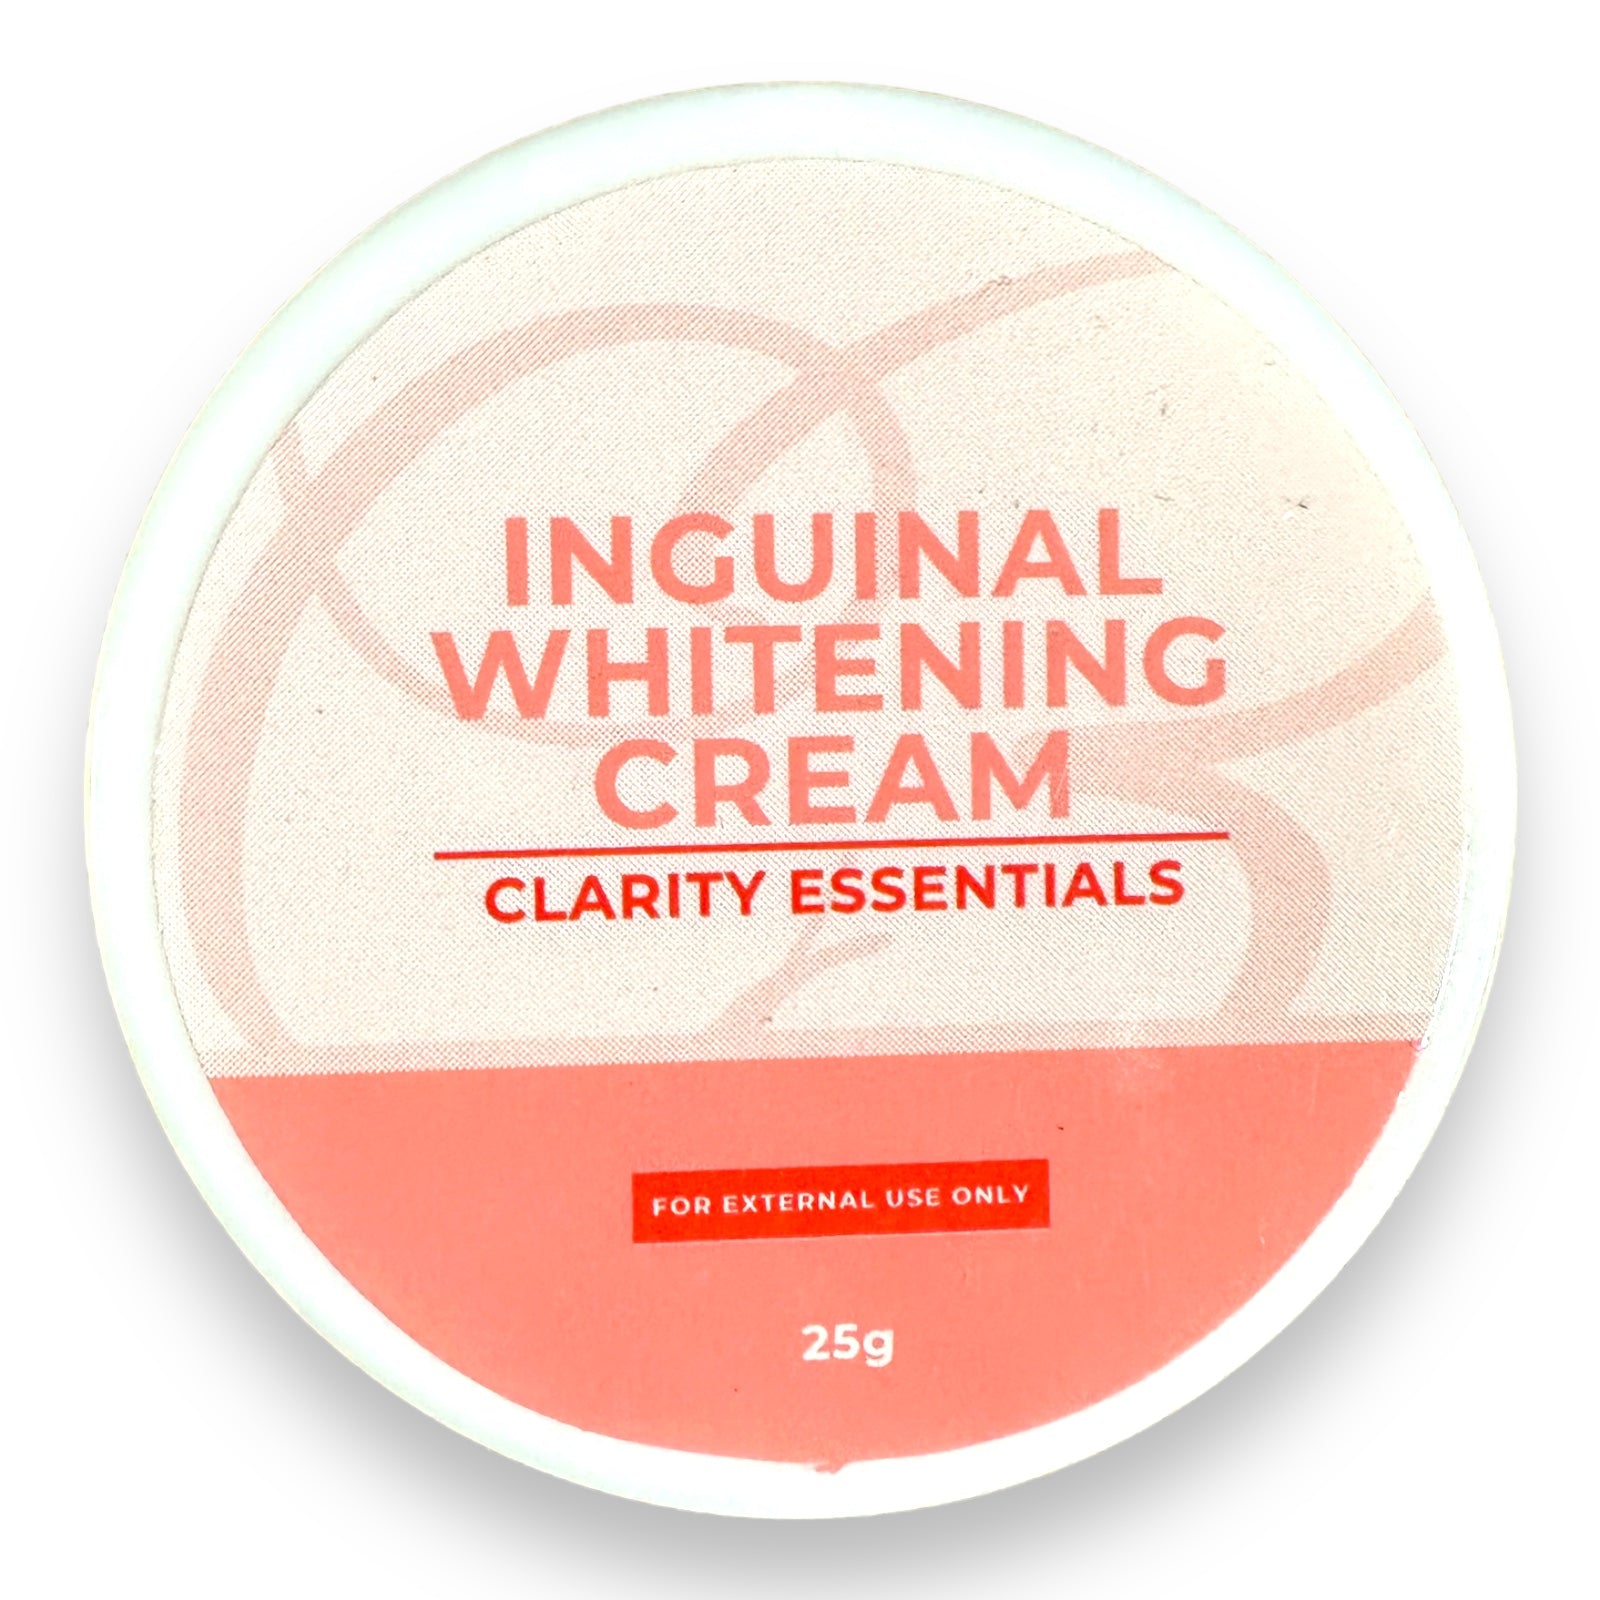 Clarity Essentials - Inguinal Whitening Cream 25g